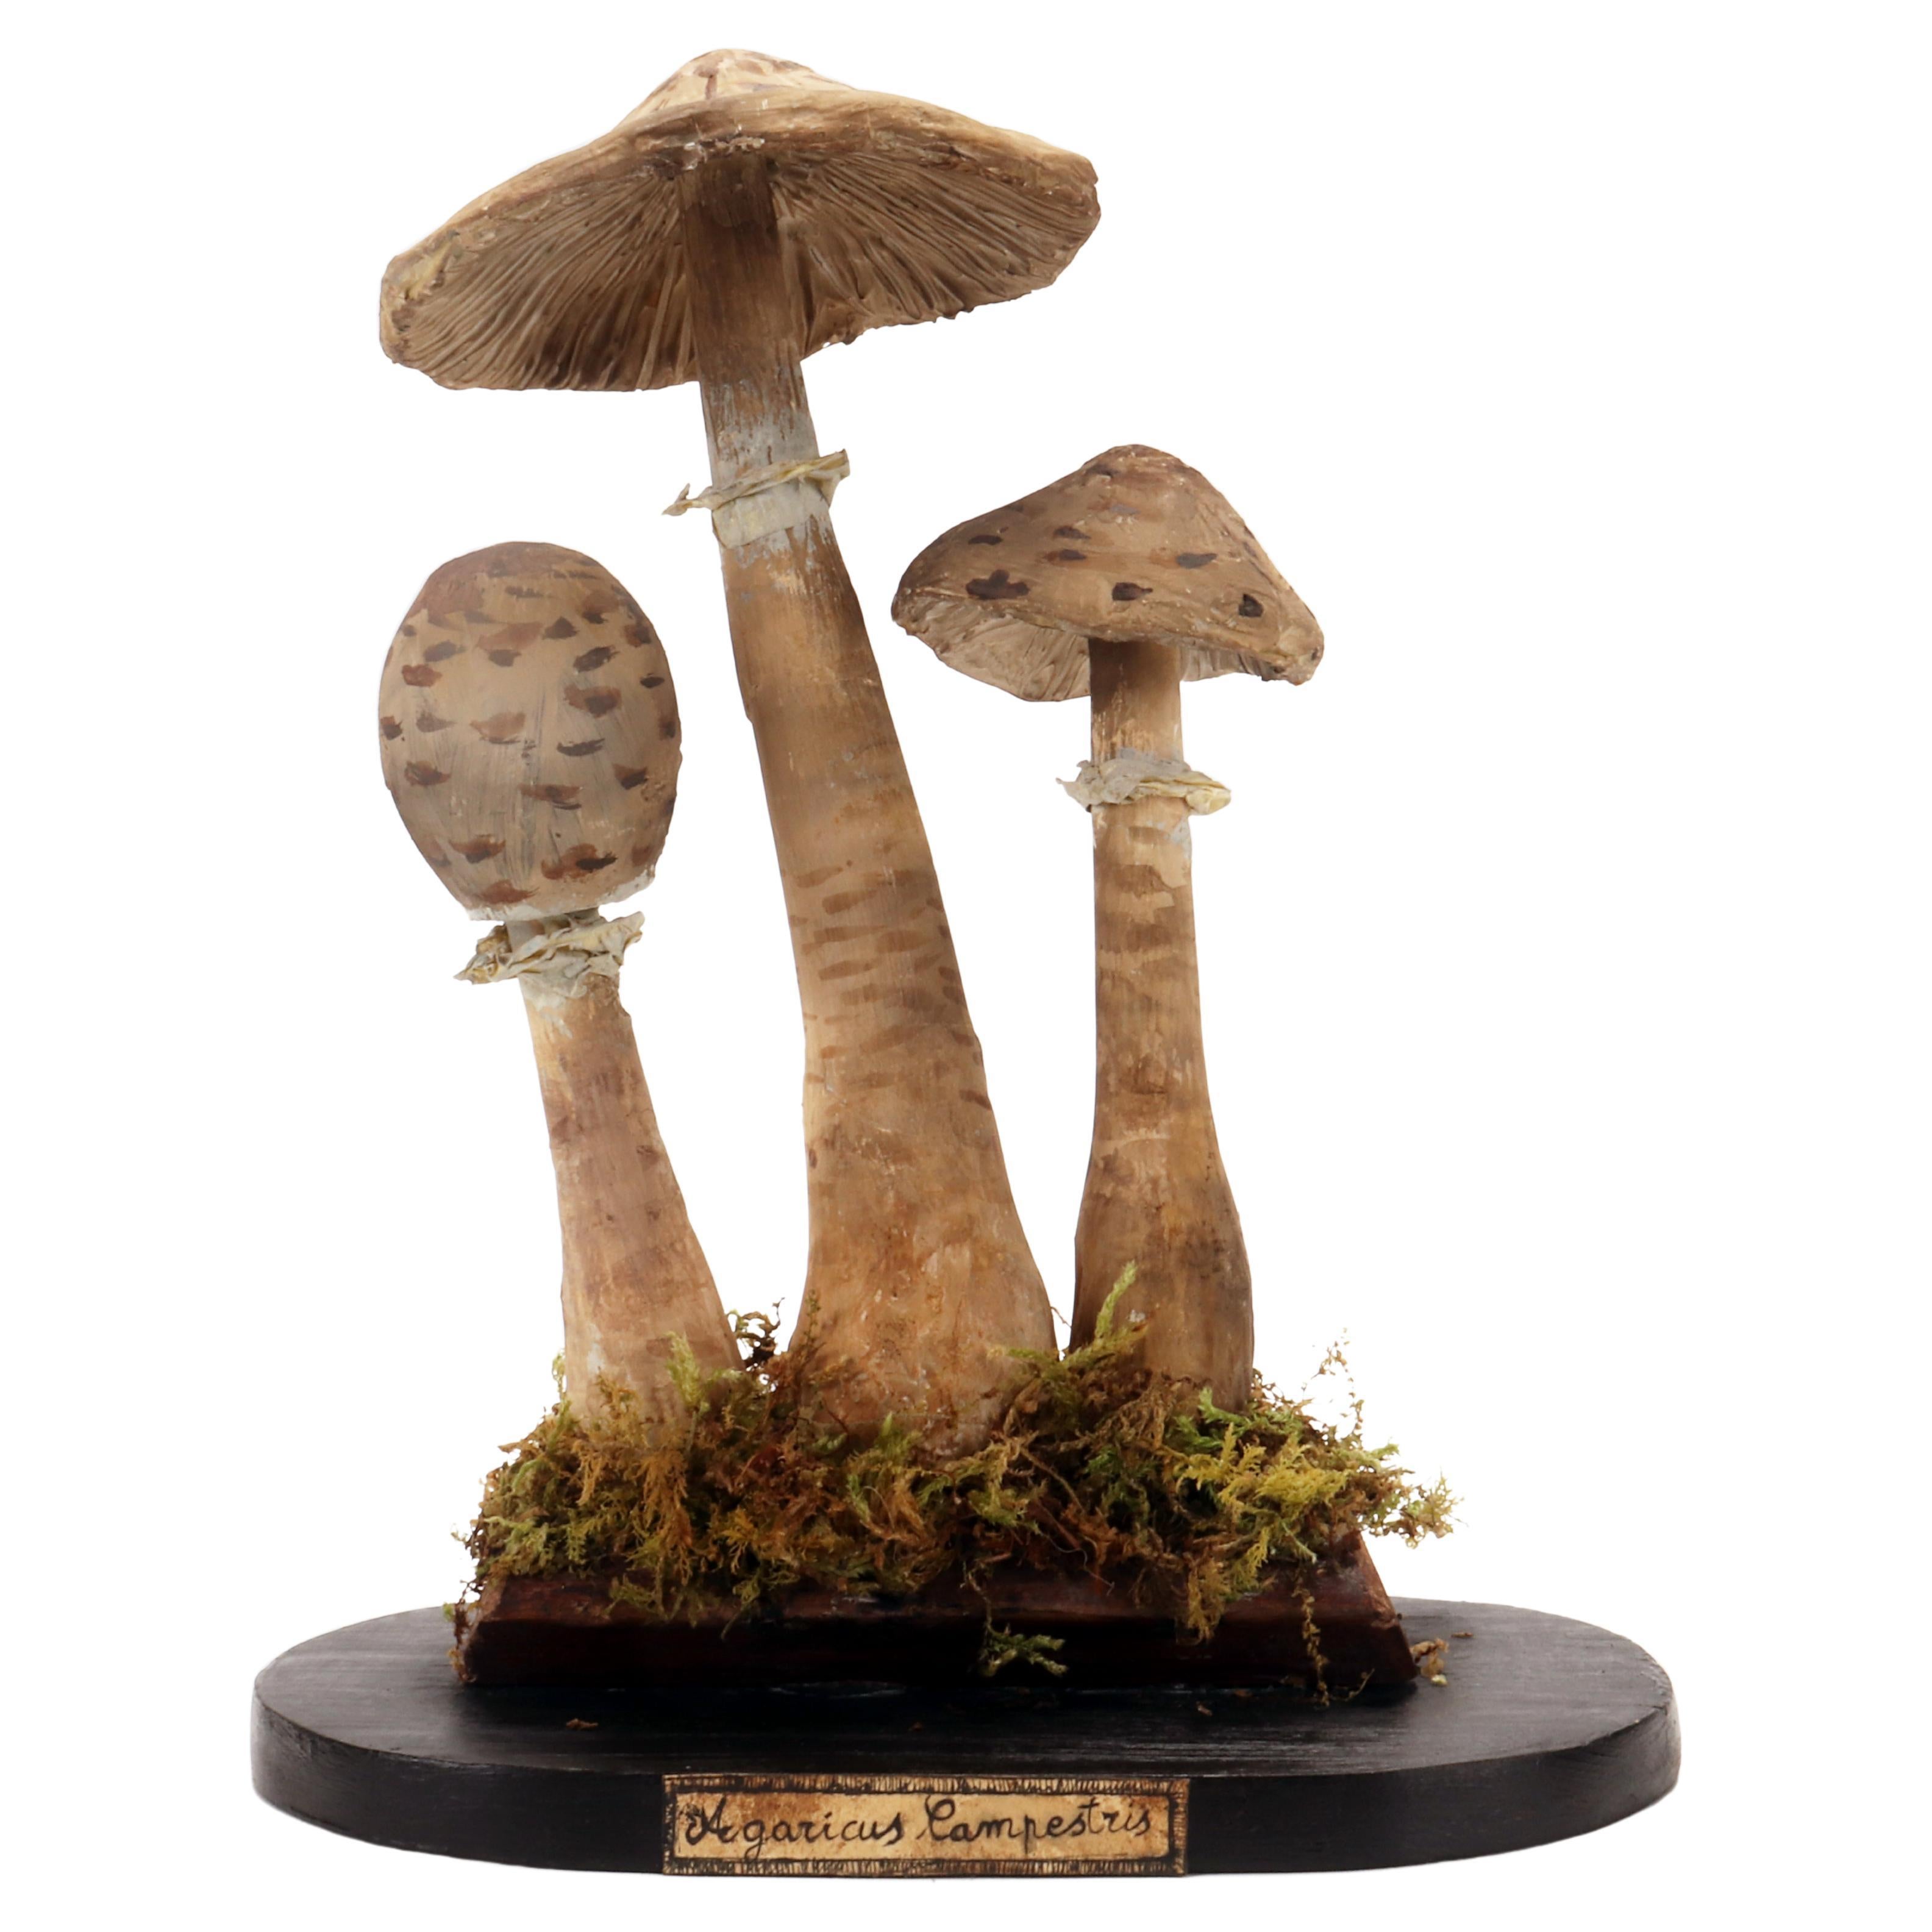 A mushrooms models: Agaricus Campestris, Germany 1890. 